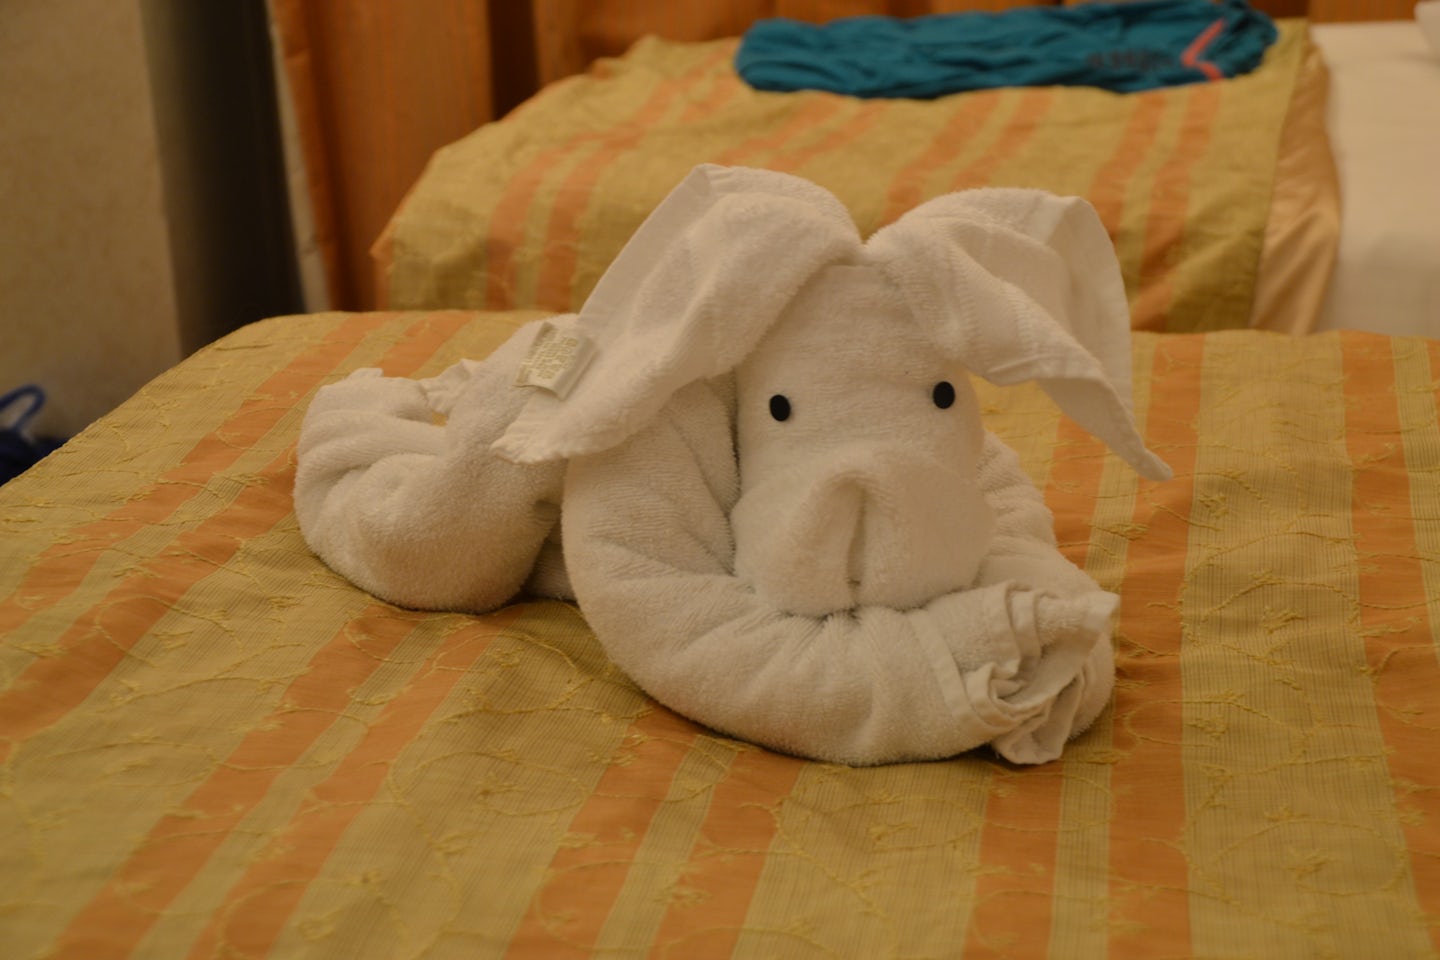 What a cutie - Towel animal fun